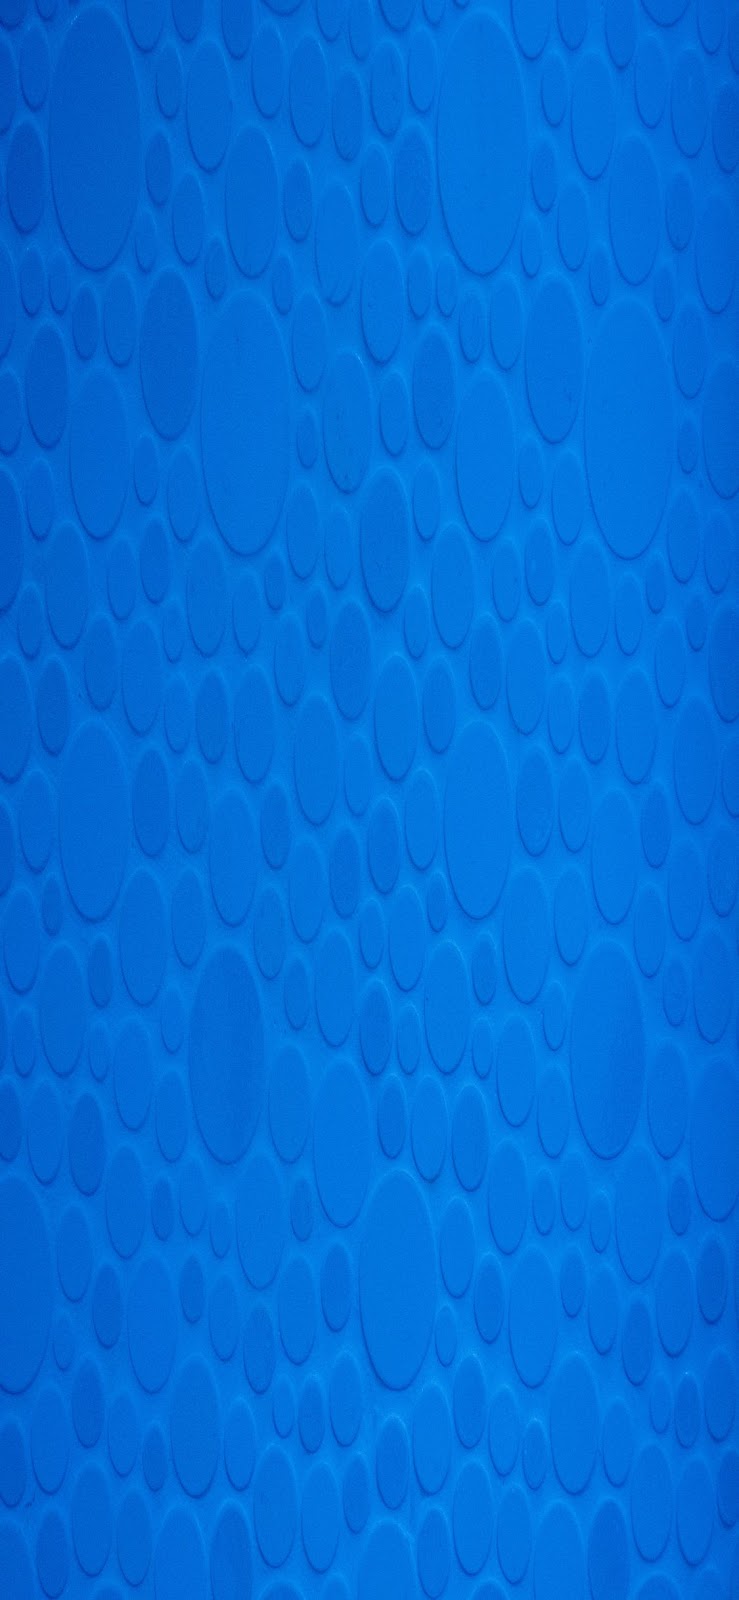 blue aesthetic wallpaper laptop,wallpaper aesthetic black,aesthetic wallpaper pastel blue,aesthetic blue wallpaper,aesthetic blue background,wallpaper aesthetic purple,aesthetic background,wallpaper aesthetic pink.